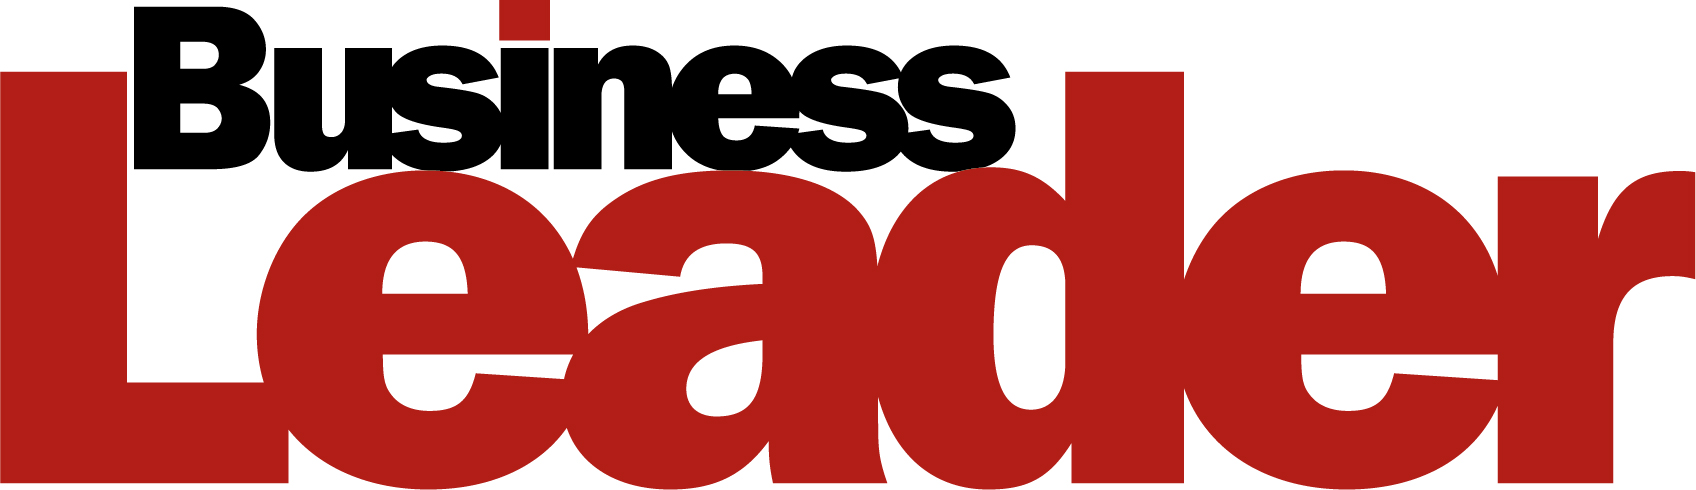 Business Leader Logo